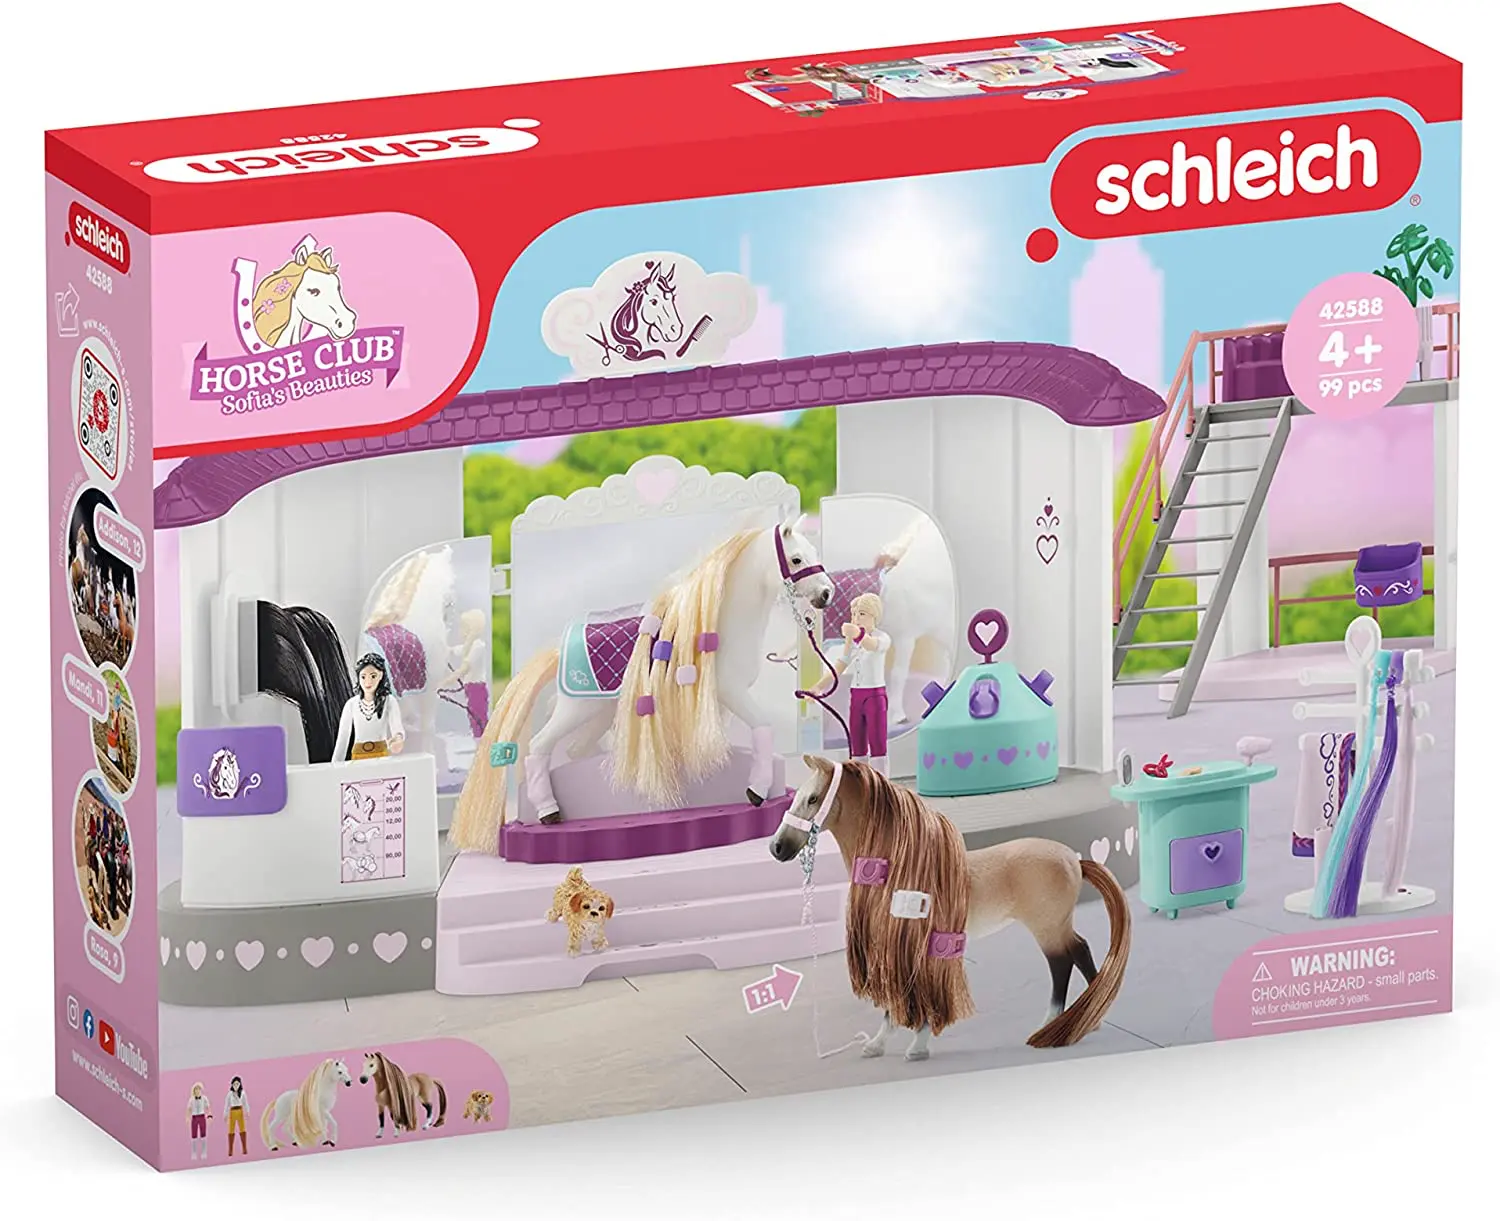 Beauty Salon - Schleich (42588) Horse Club